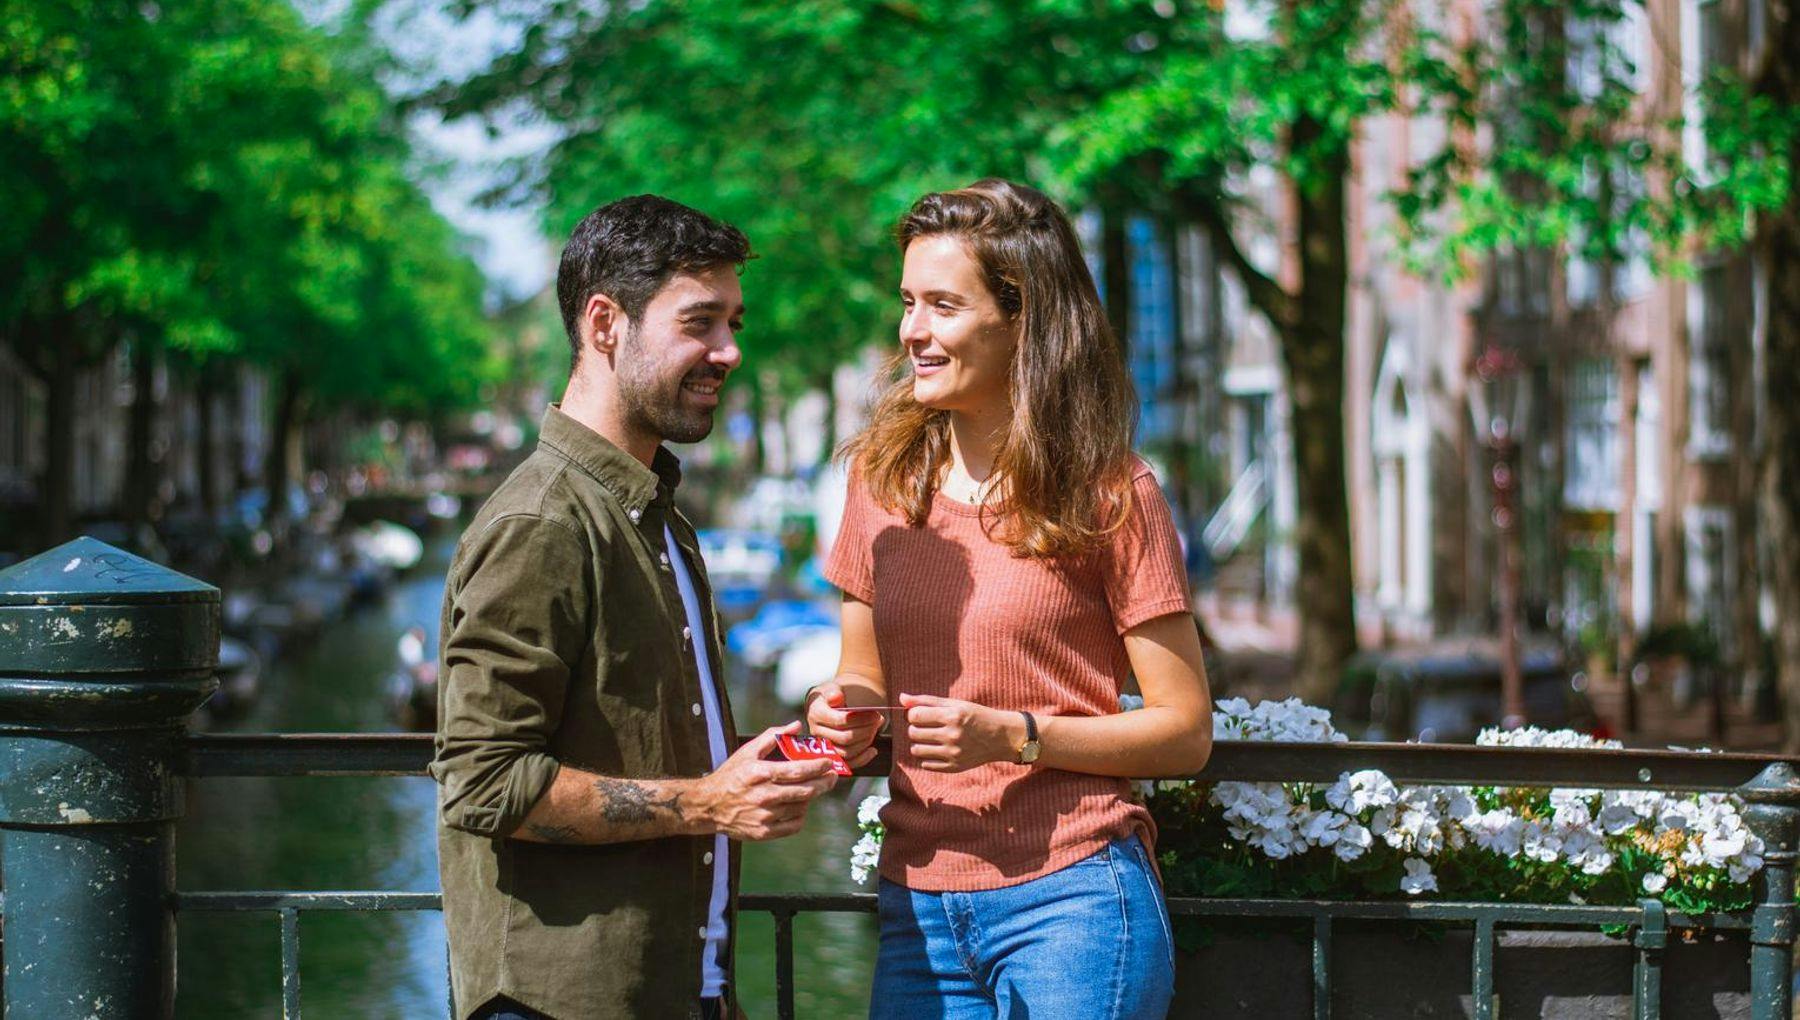 A couple holding the Iamsterdam city card